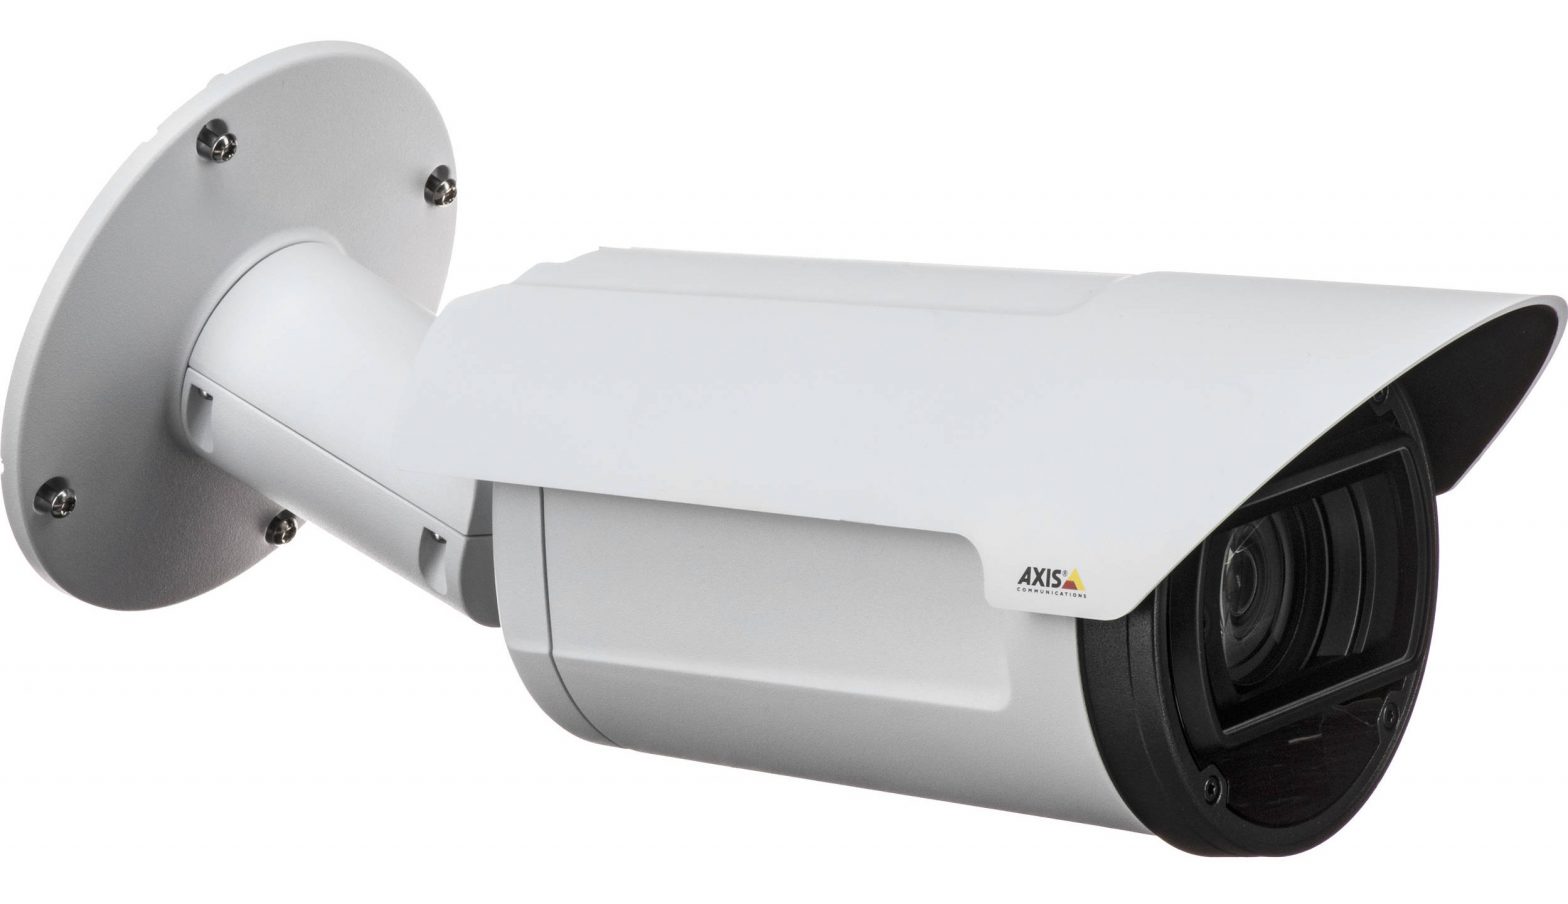 AXIS Q17 Series Network Camera User Manual